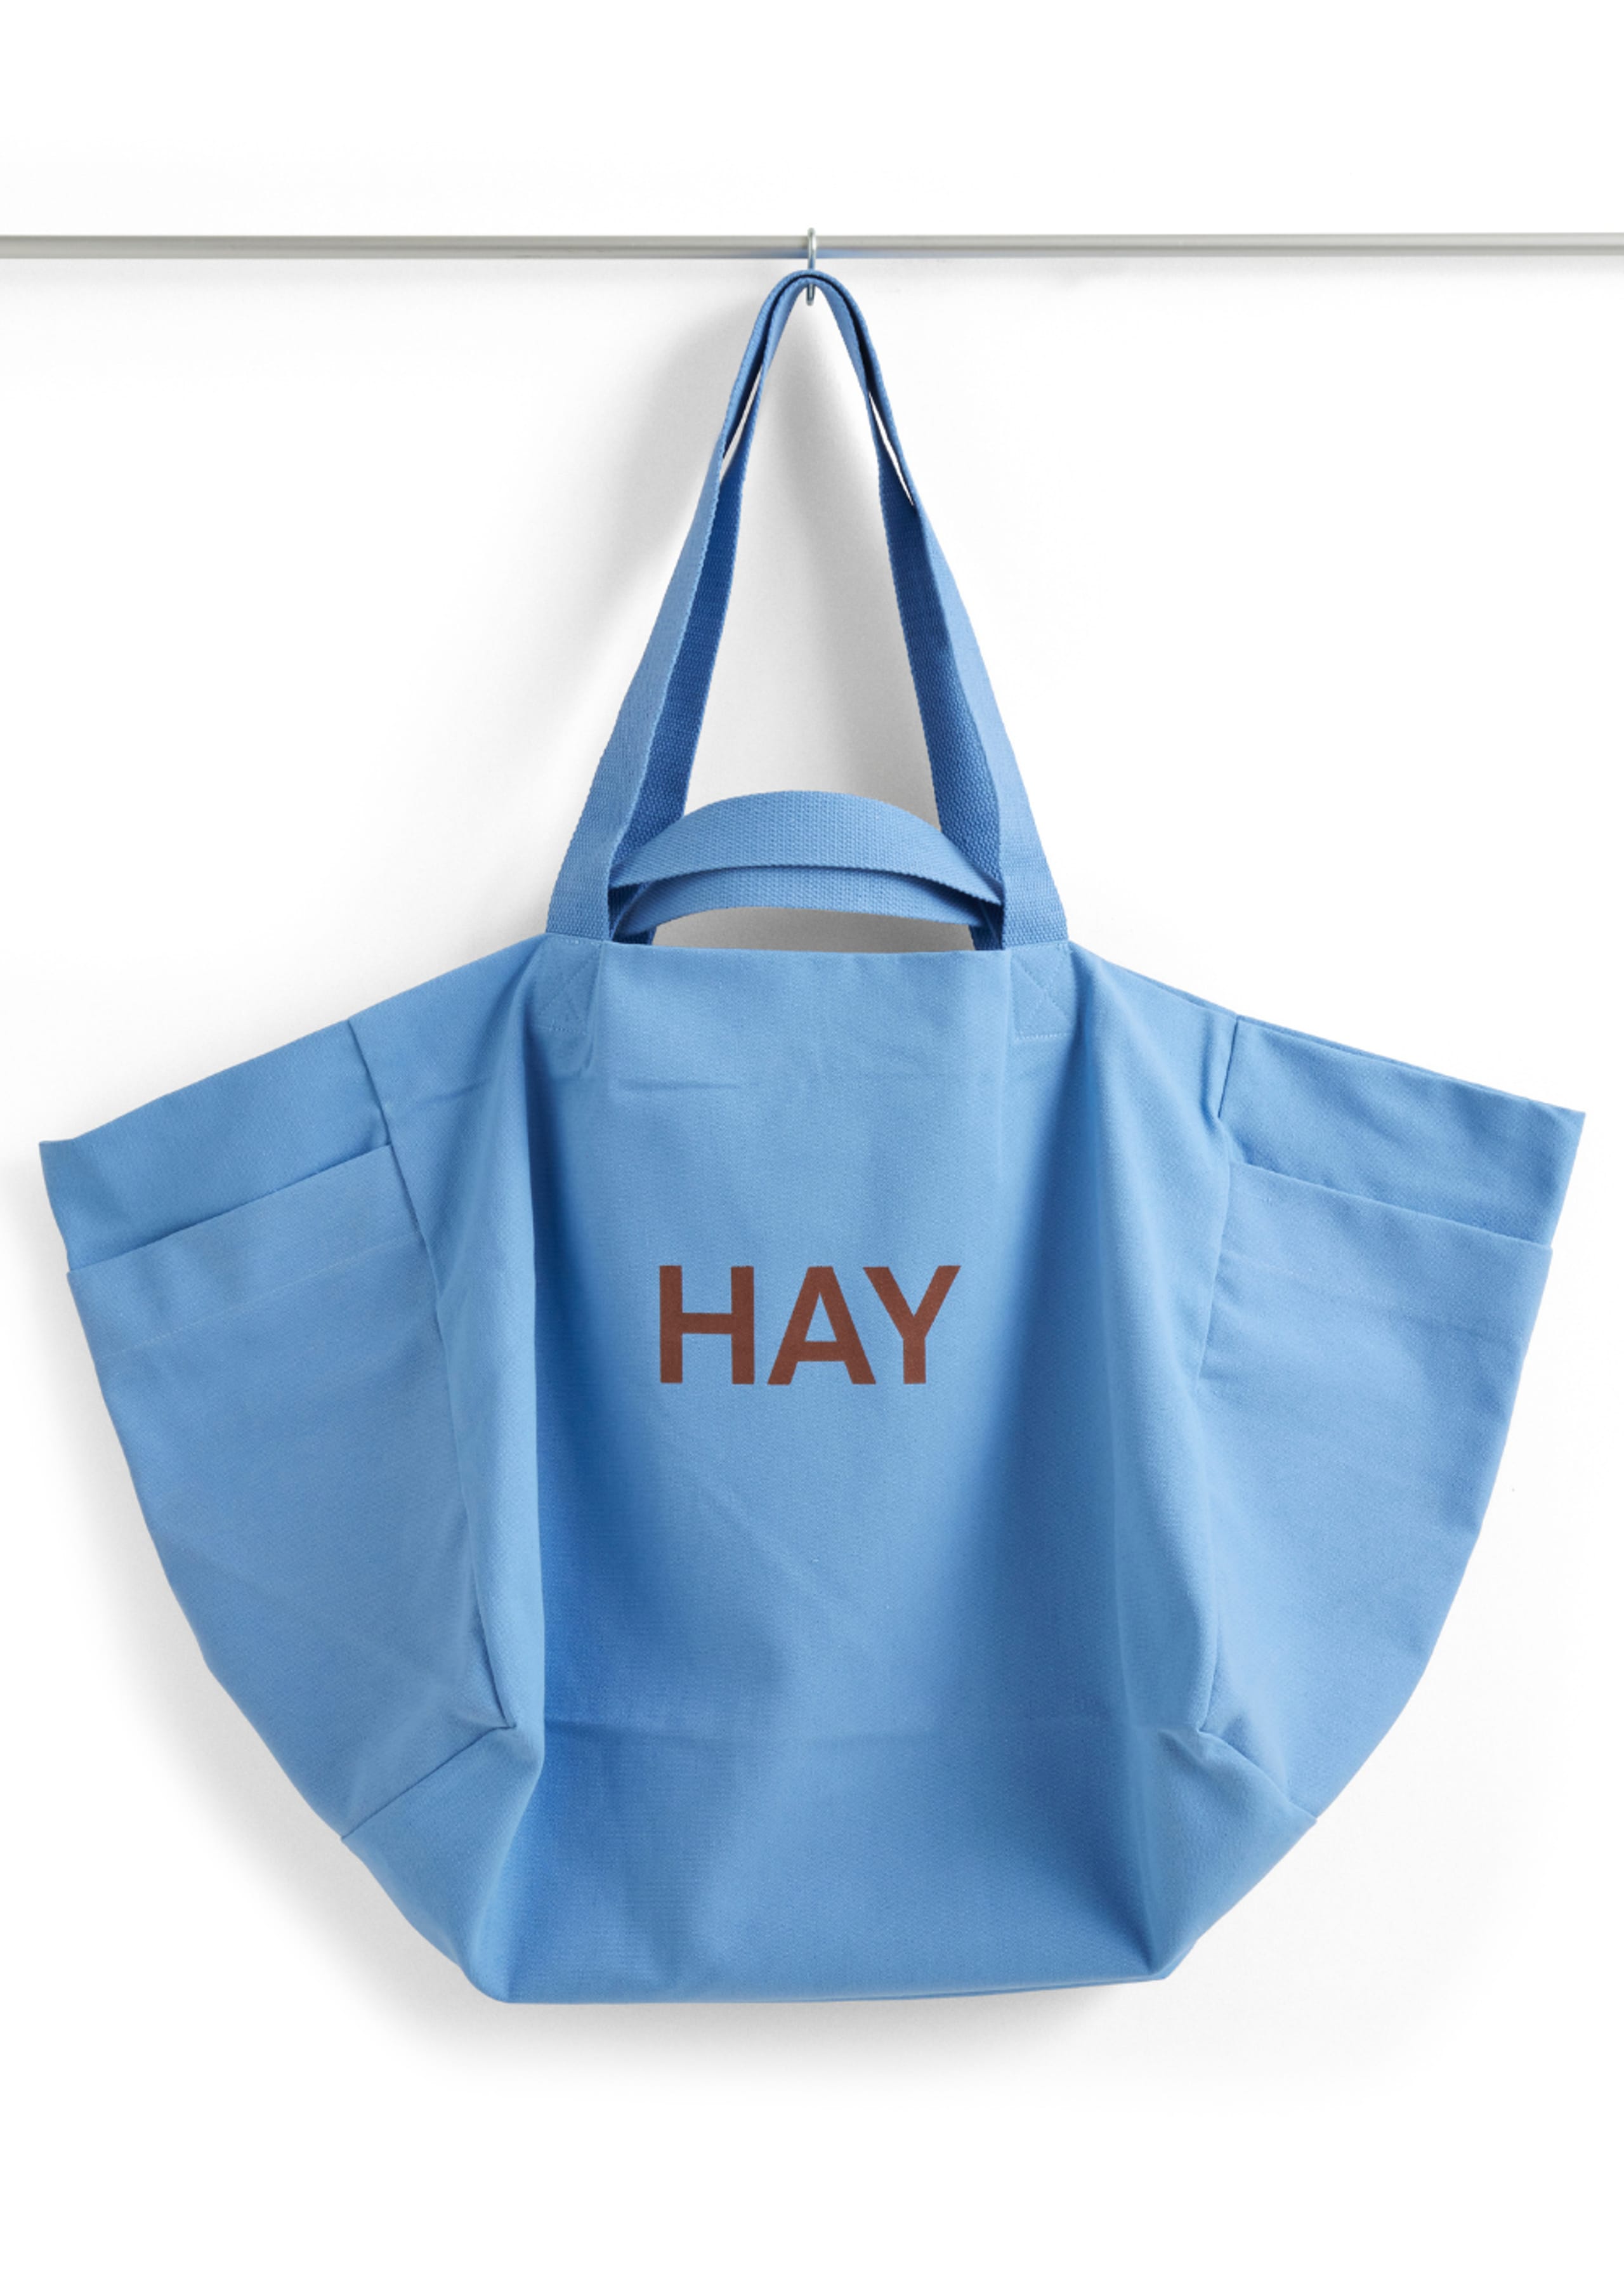 HAY - Tasche - Weekend Bag No. 2 - Sky Blue